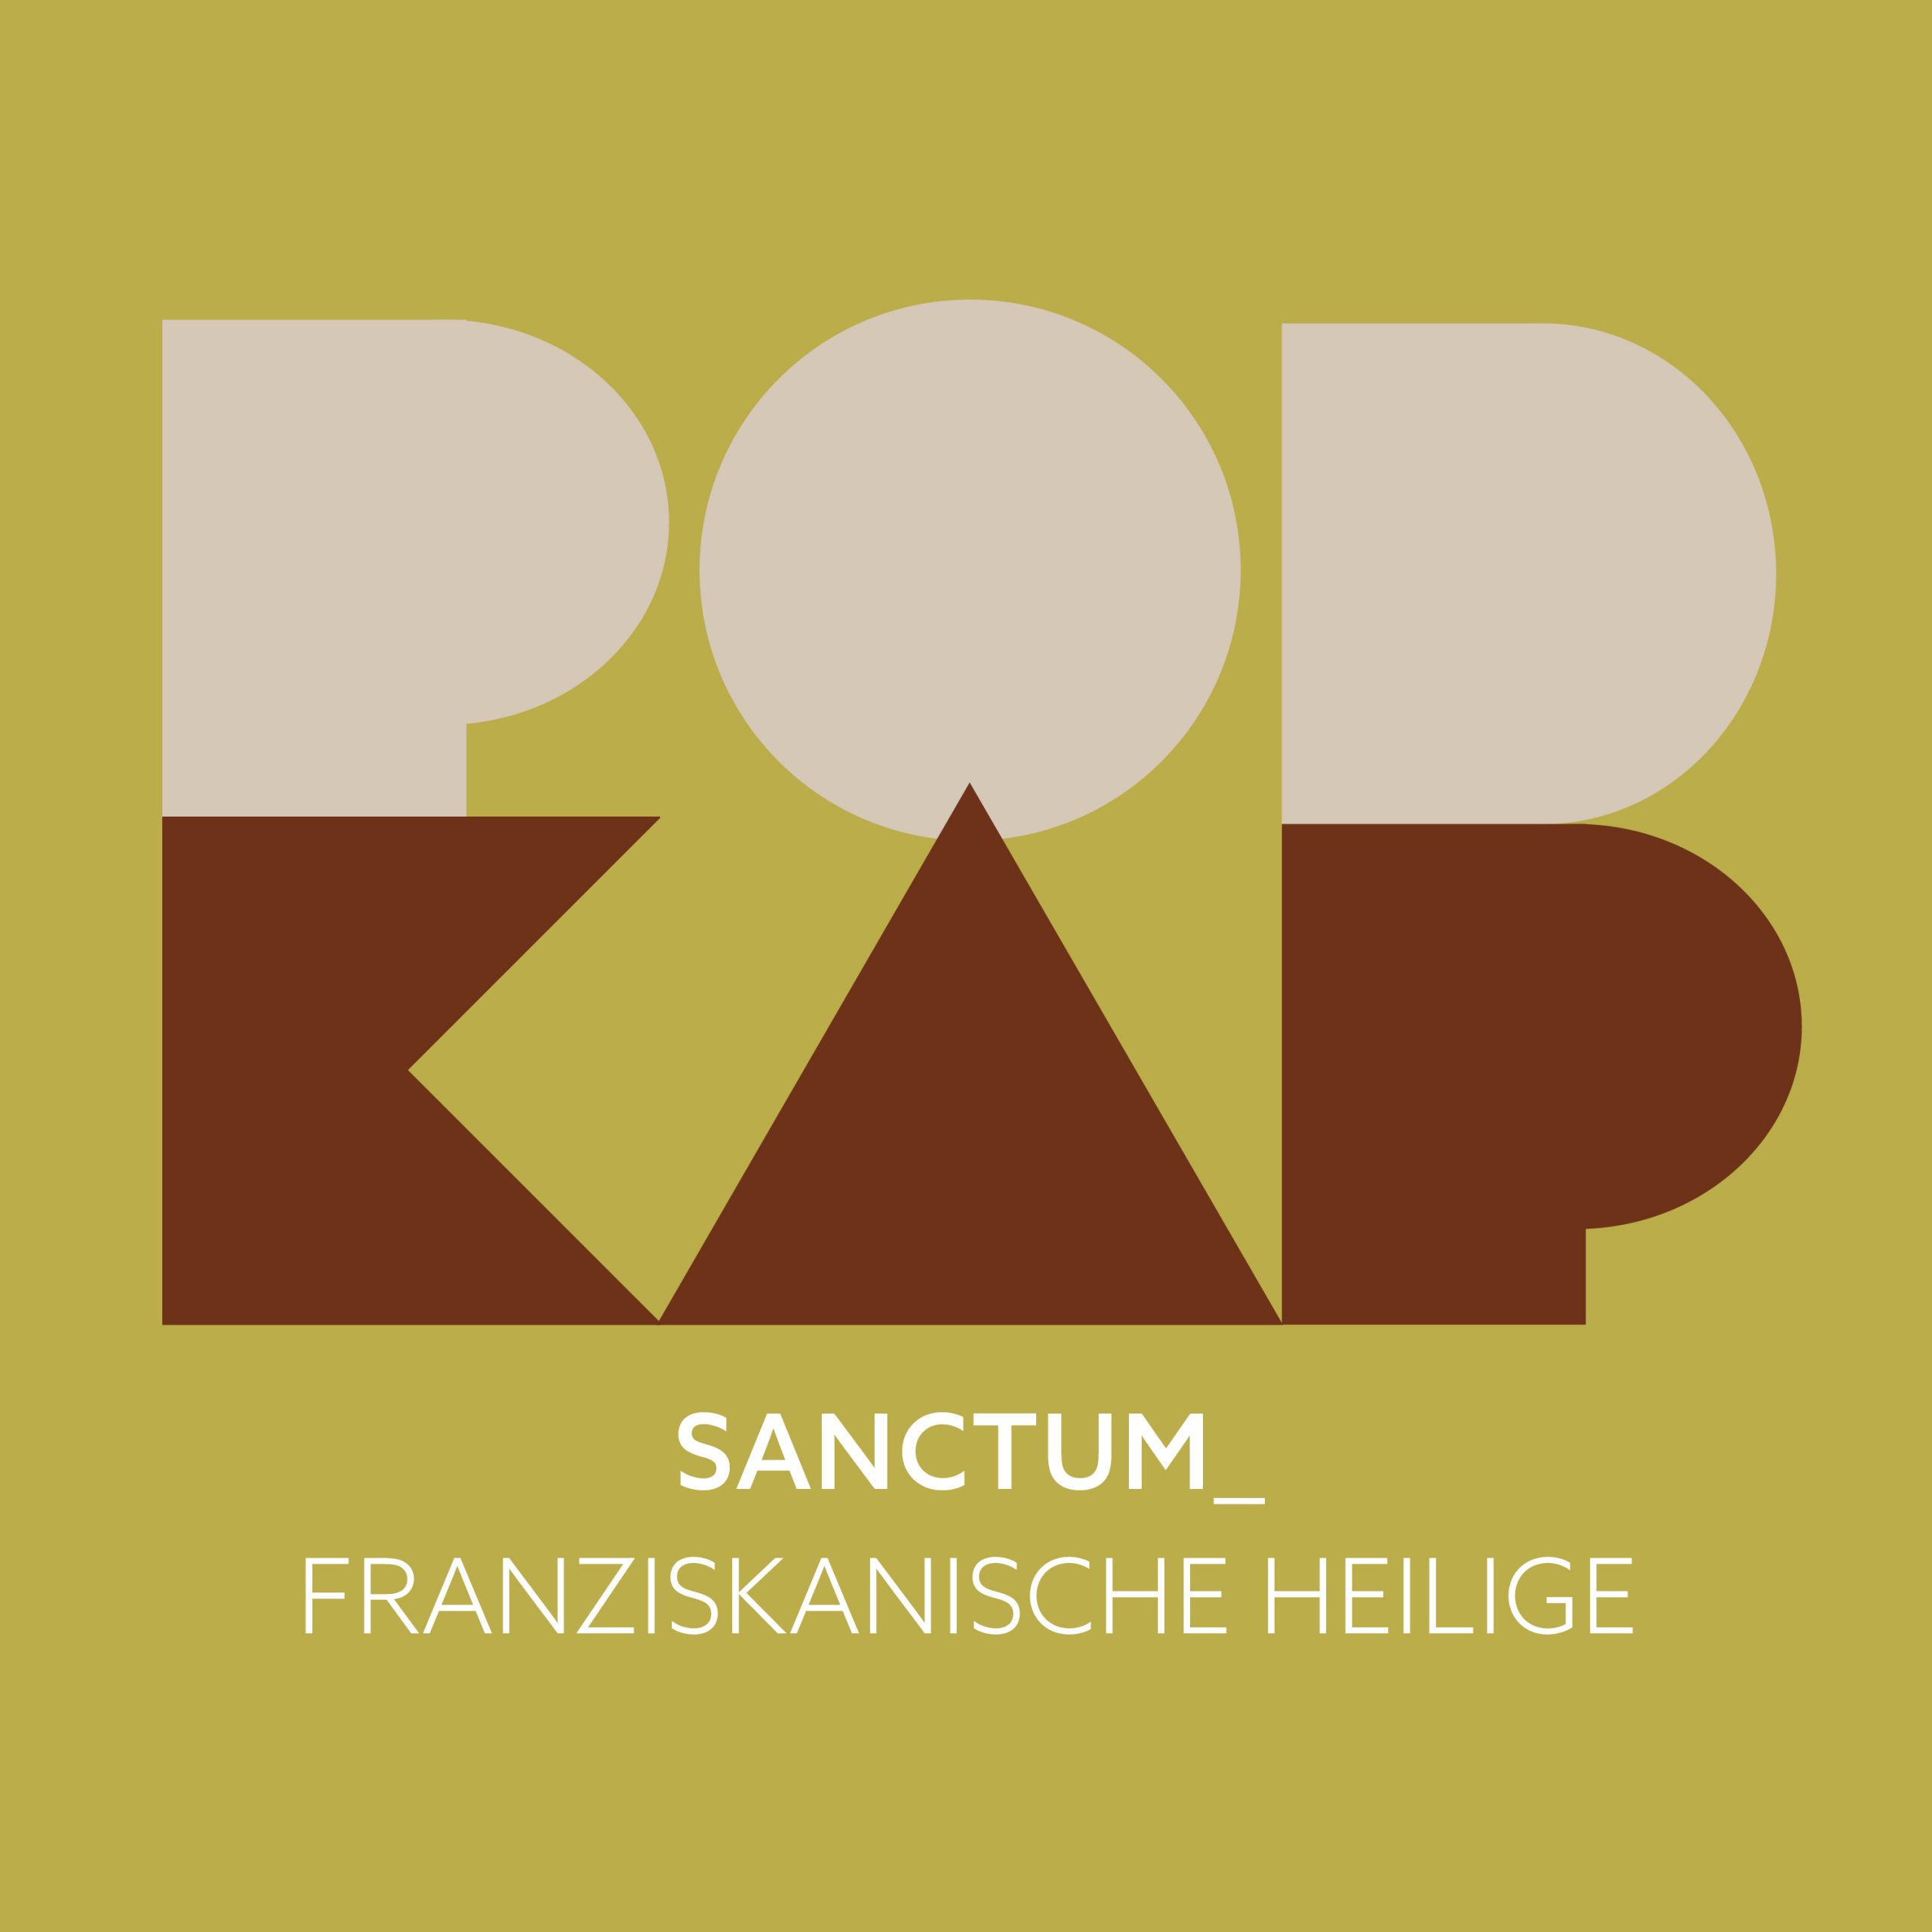 SANCTUM_Franziskanische Heilige | 46 Klara Muambule